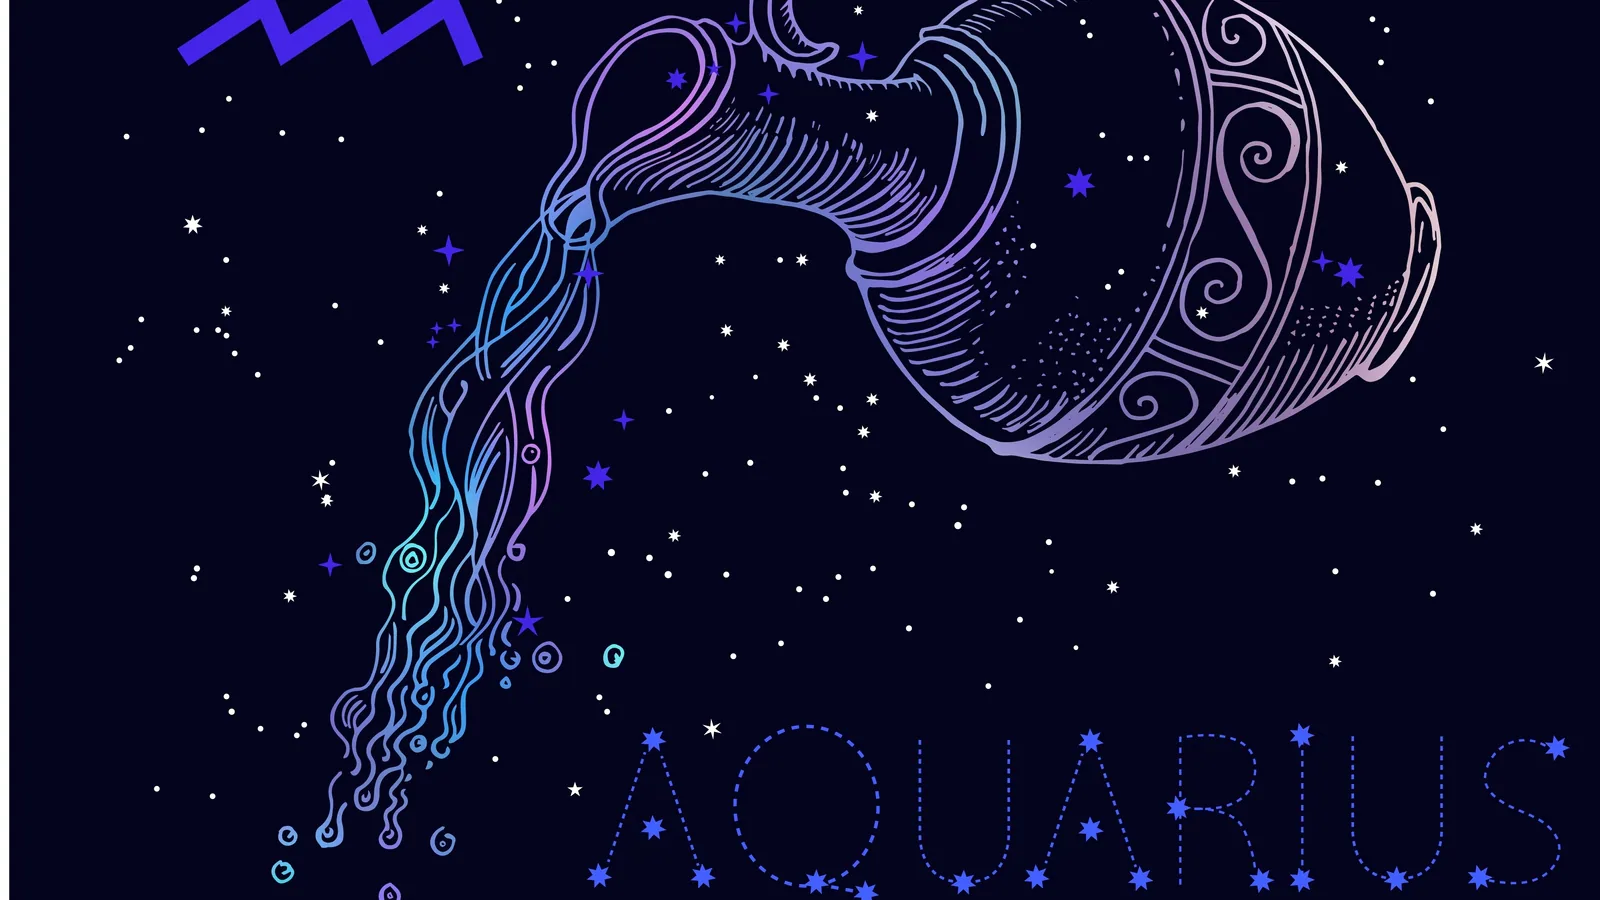 Aquarius Horoscope predictions for March 19: Make a long-term dream come true